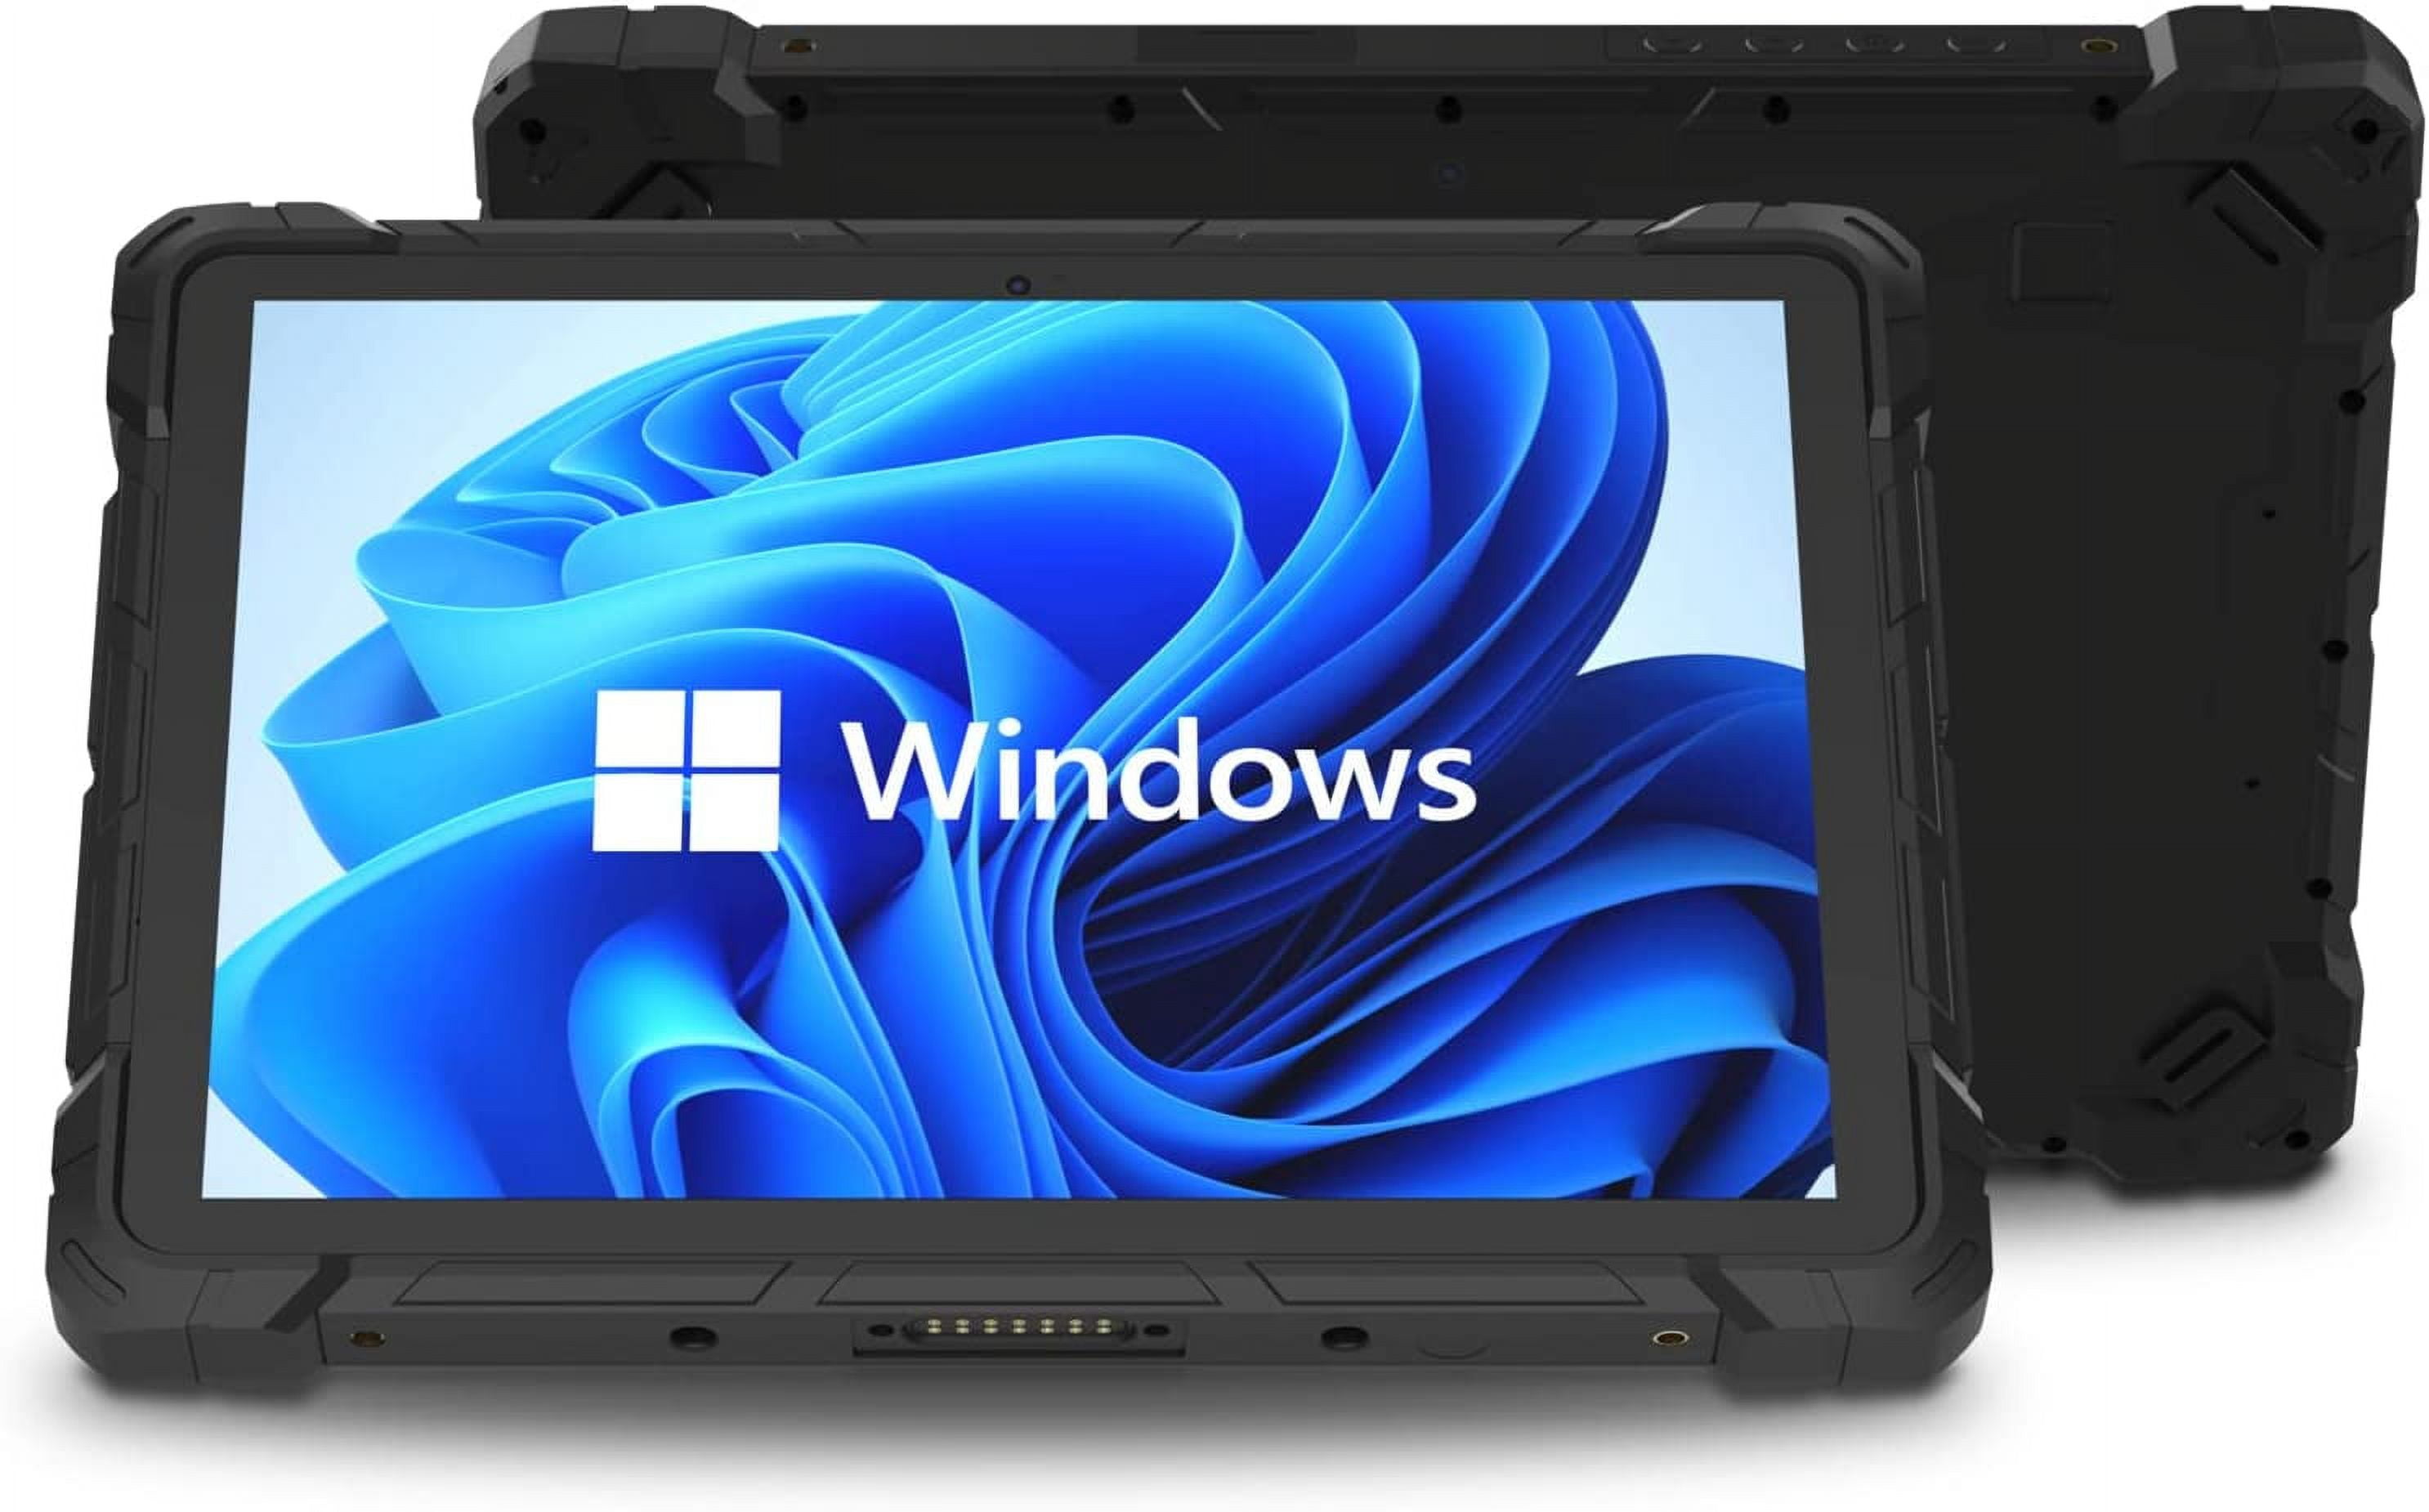 10 Windows 10 Fusion5 Ultra Slim Windows Tablet PC- (4GB RAM, USB 3.0,  Intel, 5MP and 2MP Cameras, Windows 10 S Tablet PC) (64GB) 